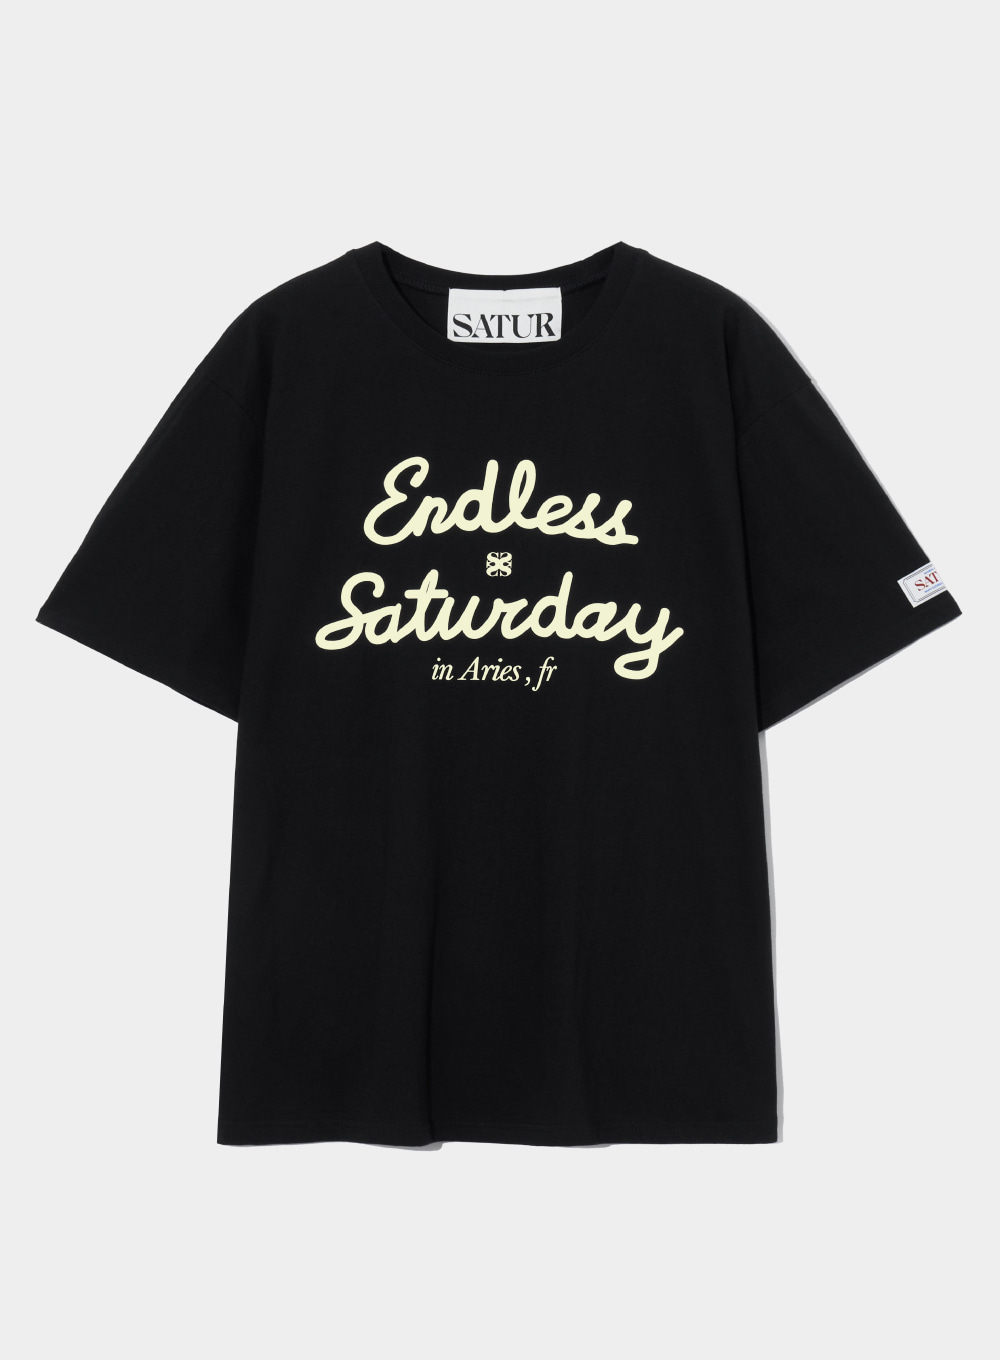 Endless Saturday T-shirts - Classic Black